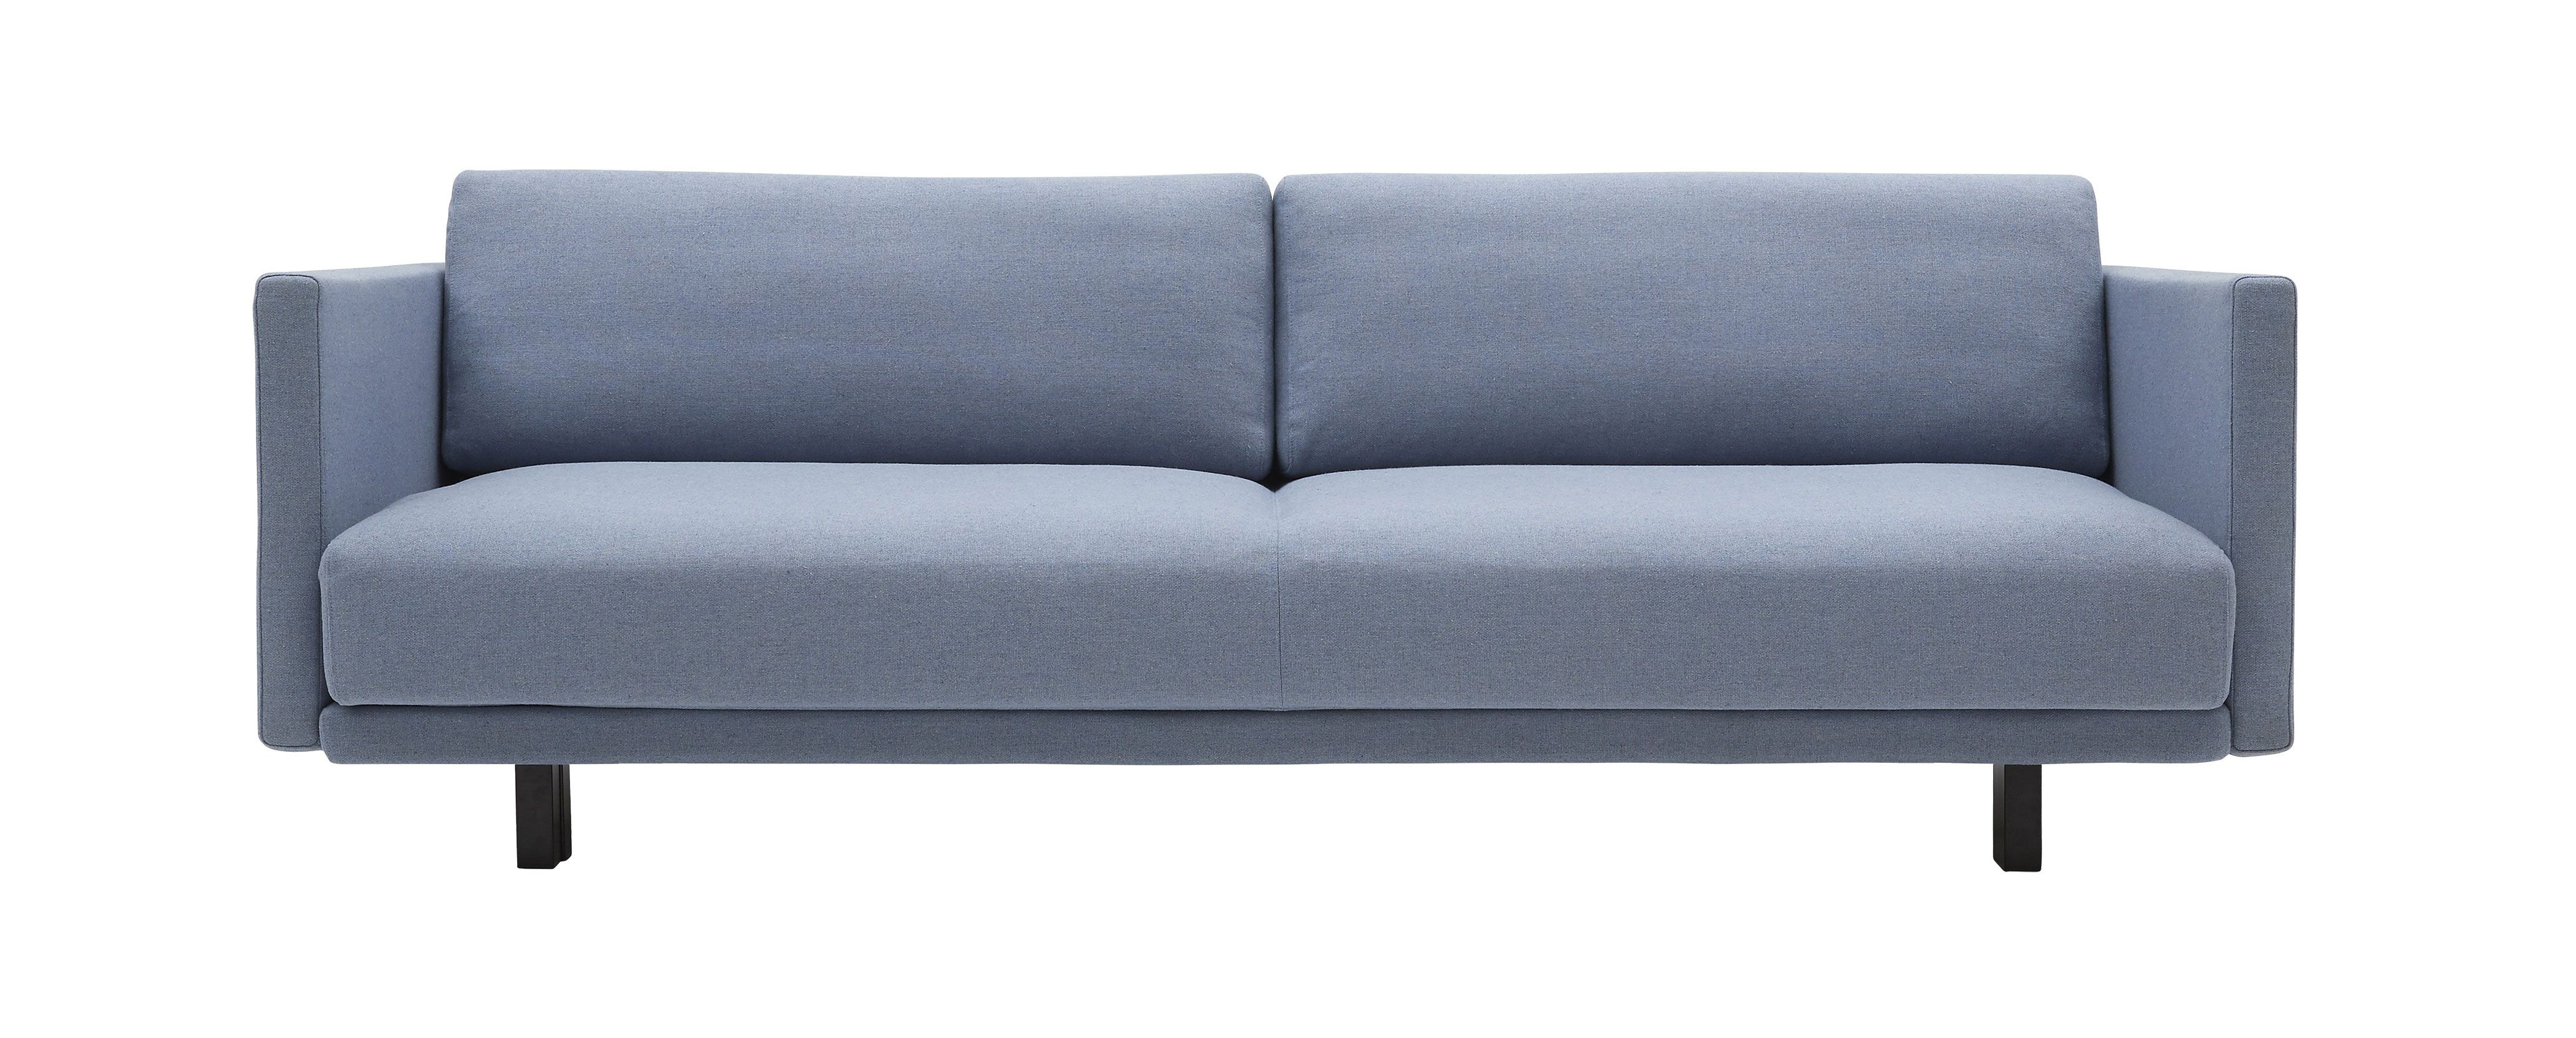 Sofa bed Meghan by Softline